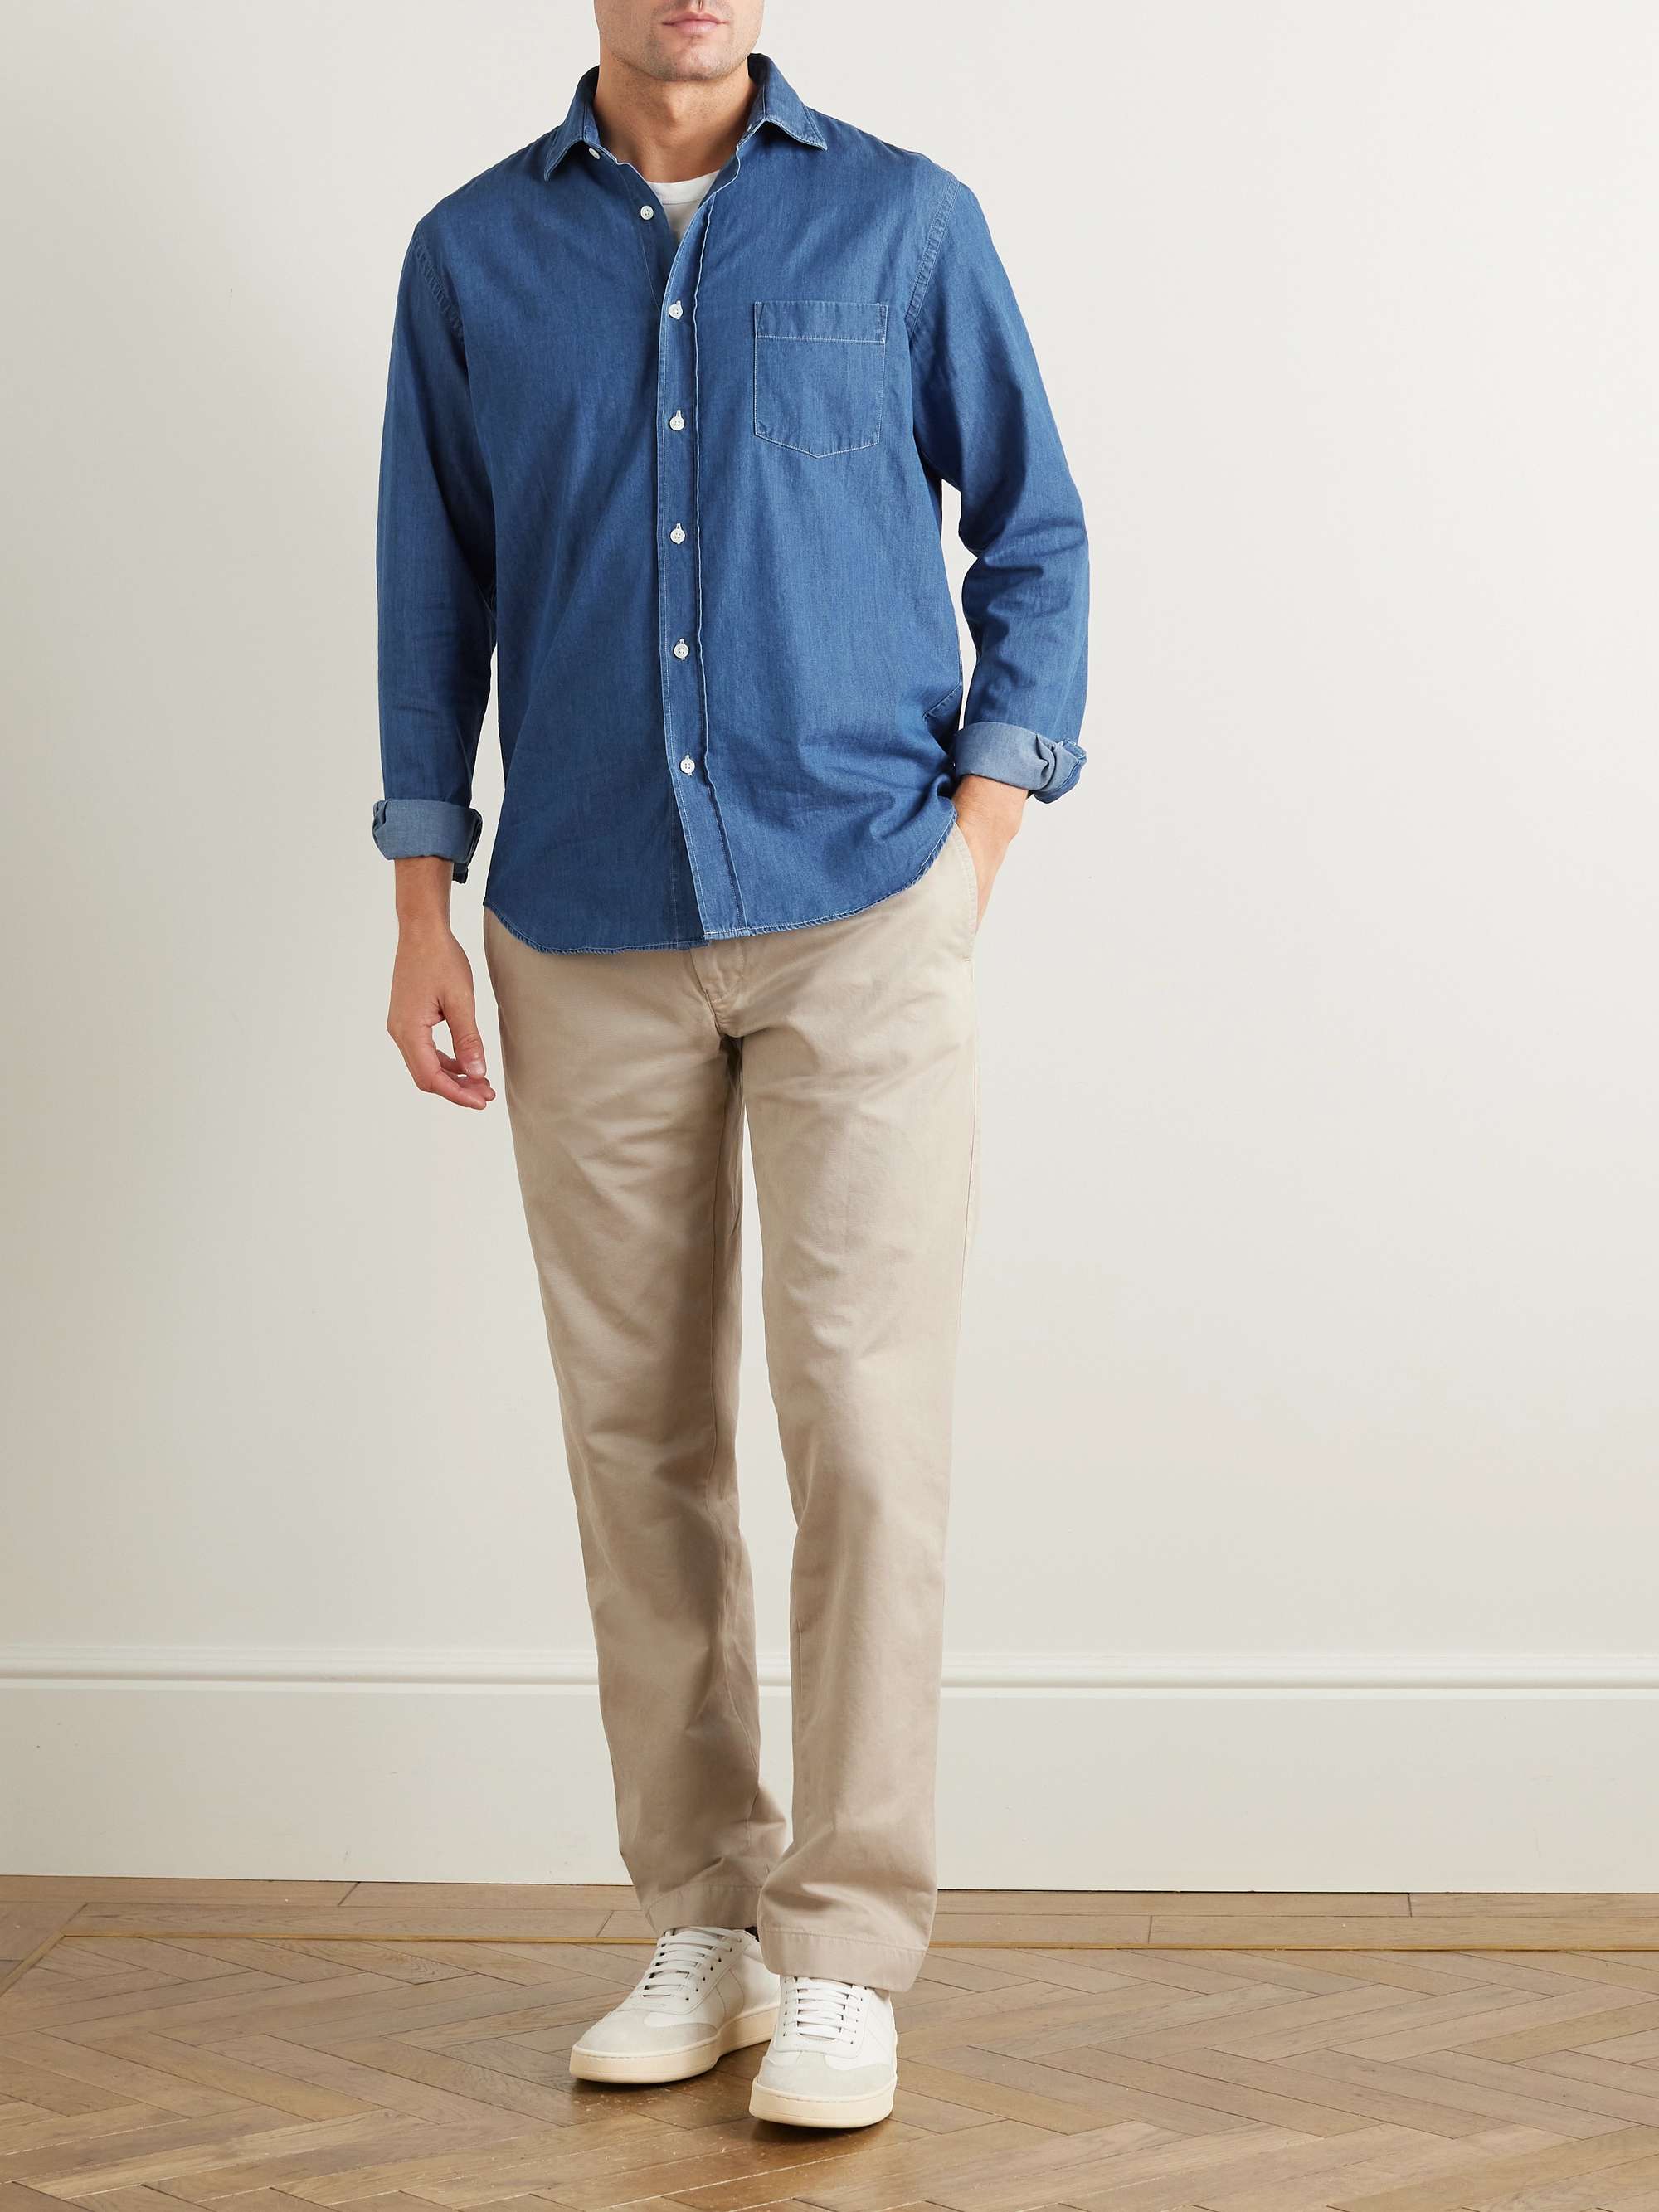 Shirt and pants color combinations, men. | Shirt pant combination photos. -  TiptopGents | Denim shirt men, Blue shirt combination, Black shirt outfit  men